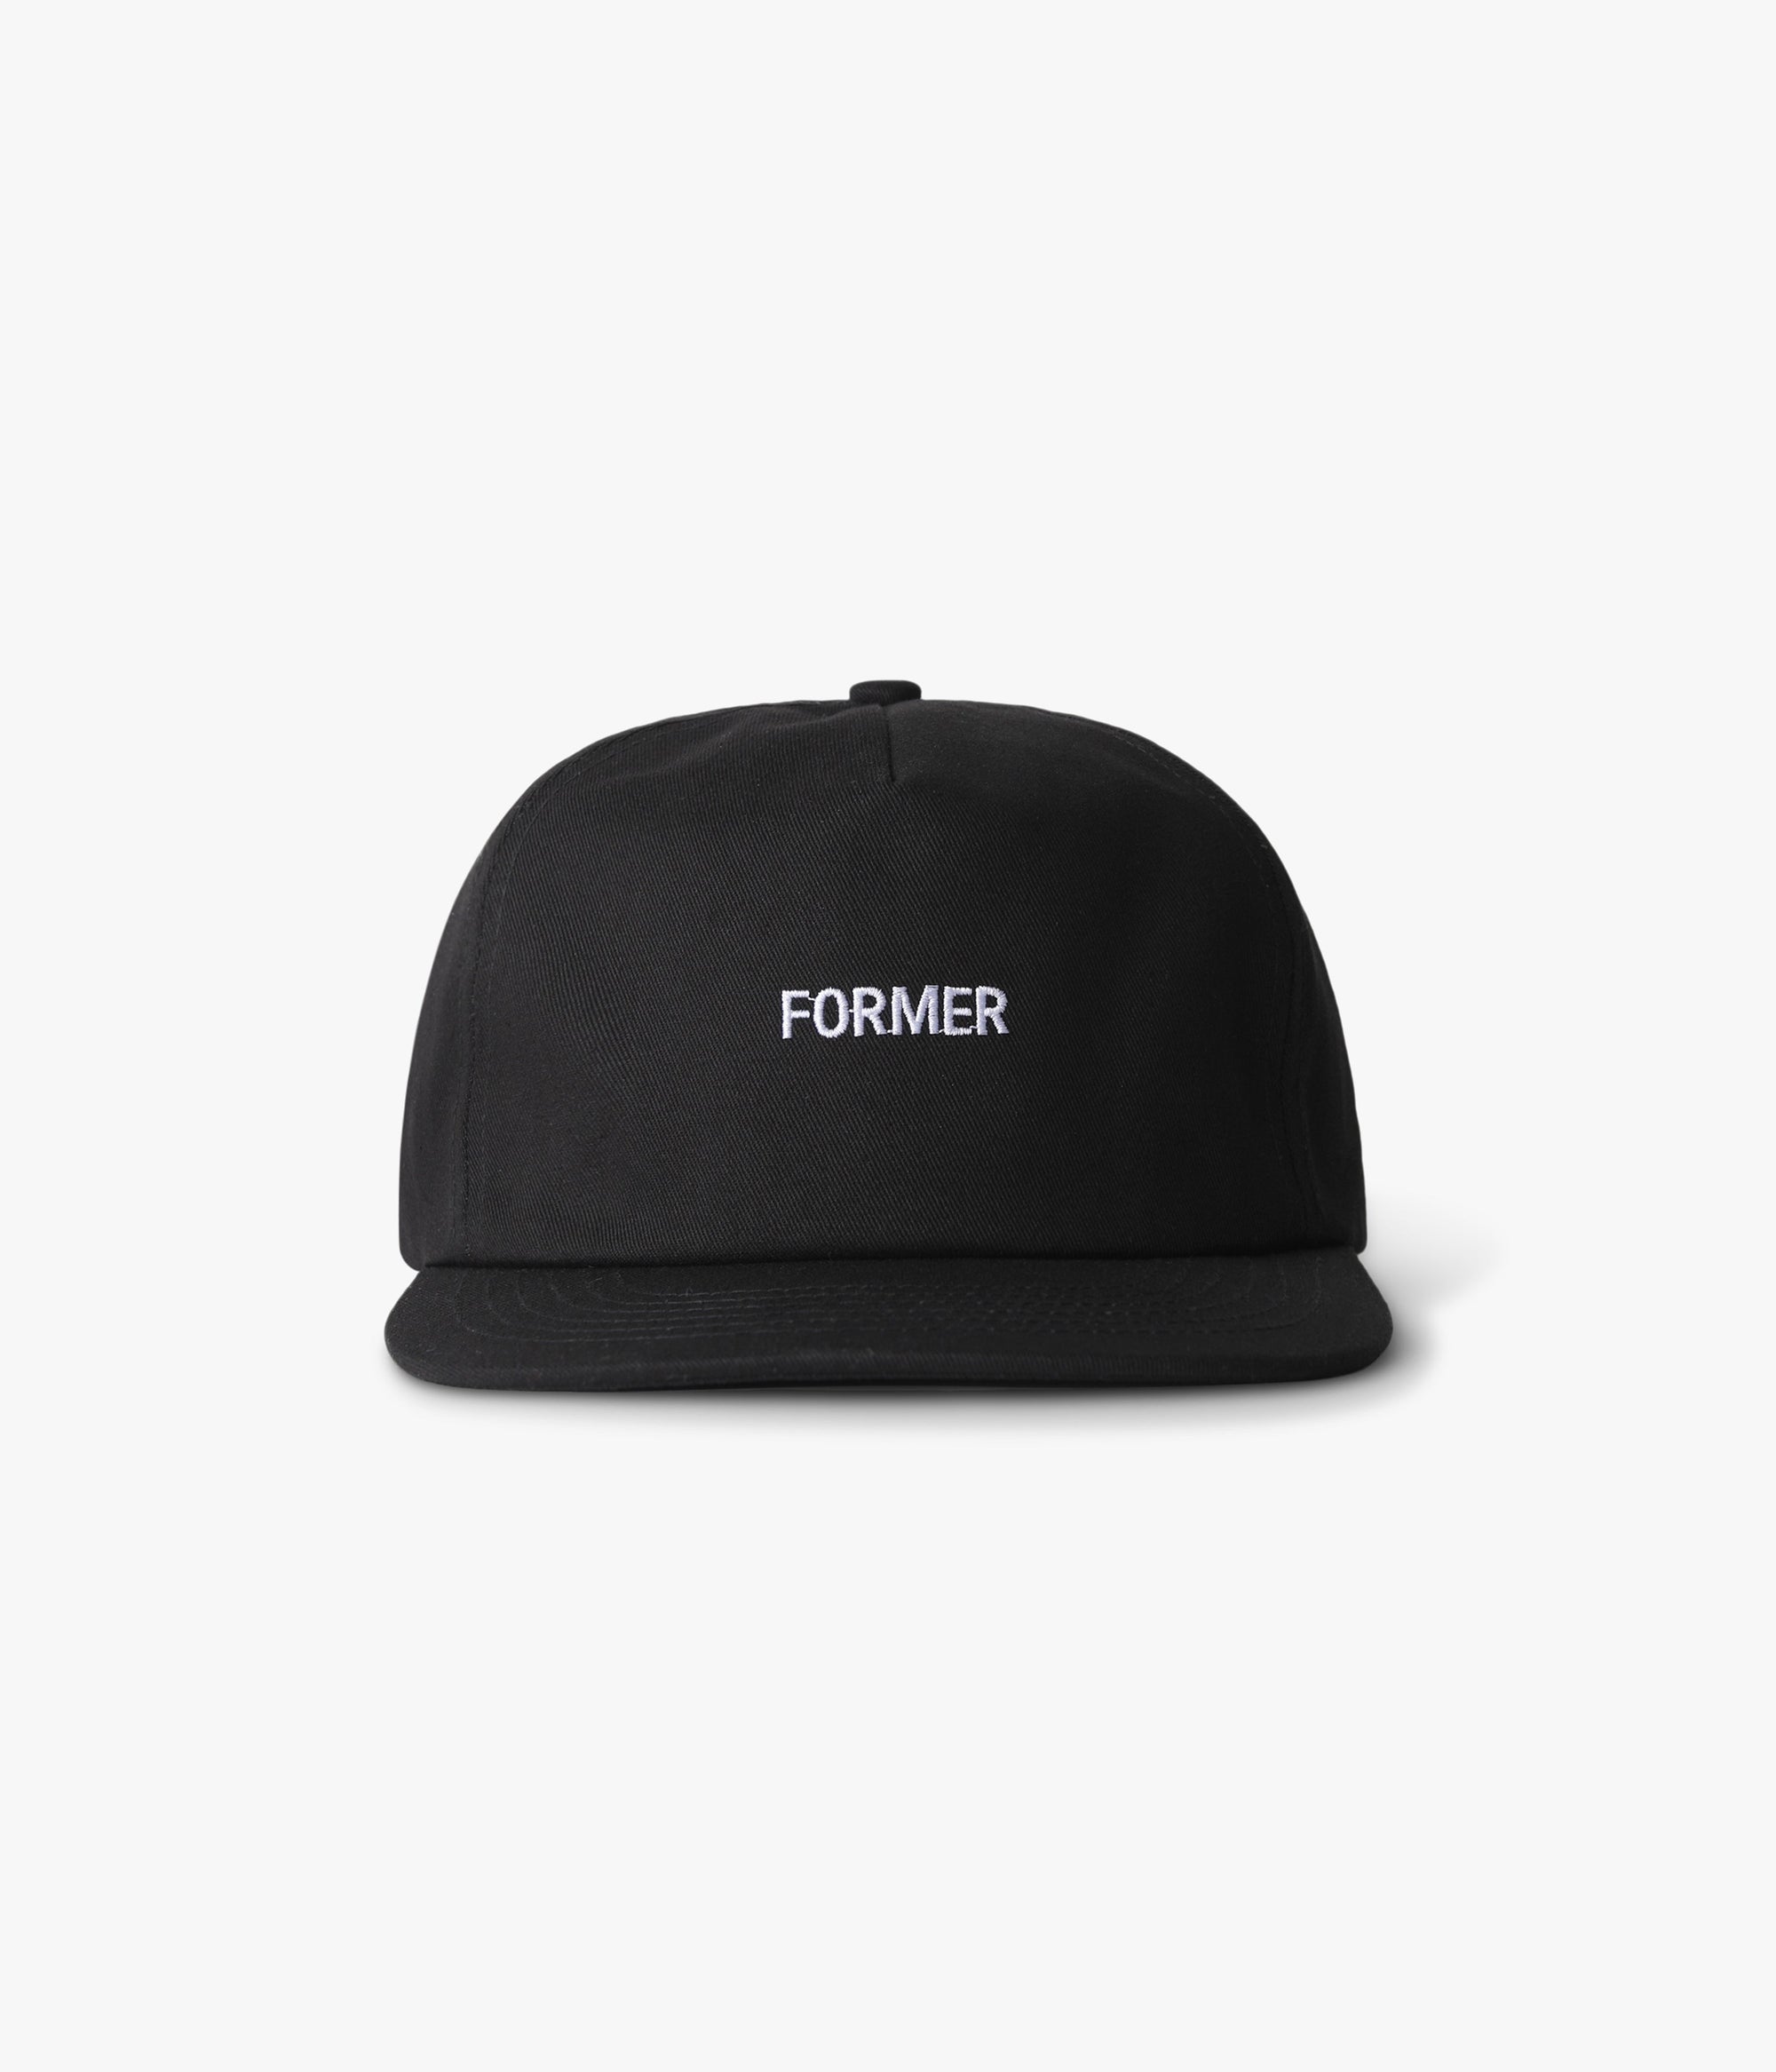 Former Merchandise - LEGACY CAP - BLACK